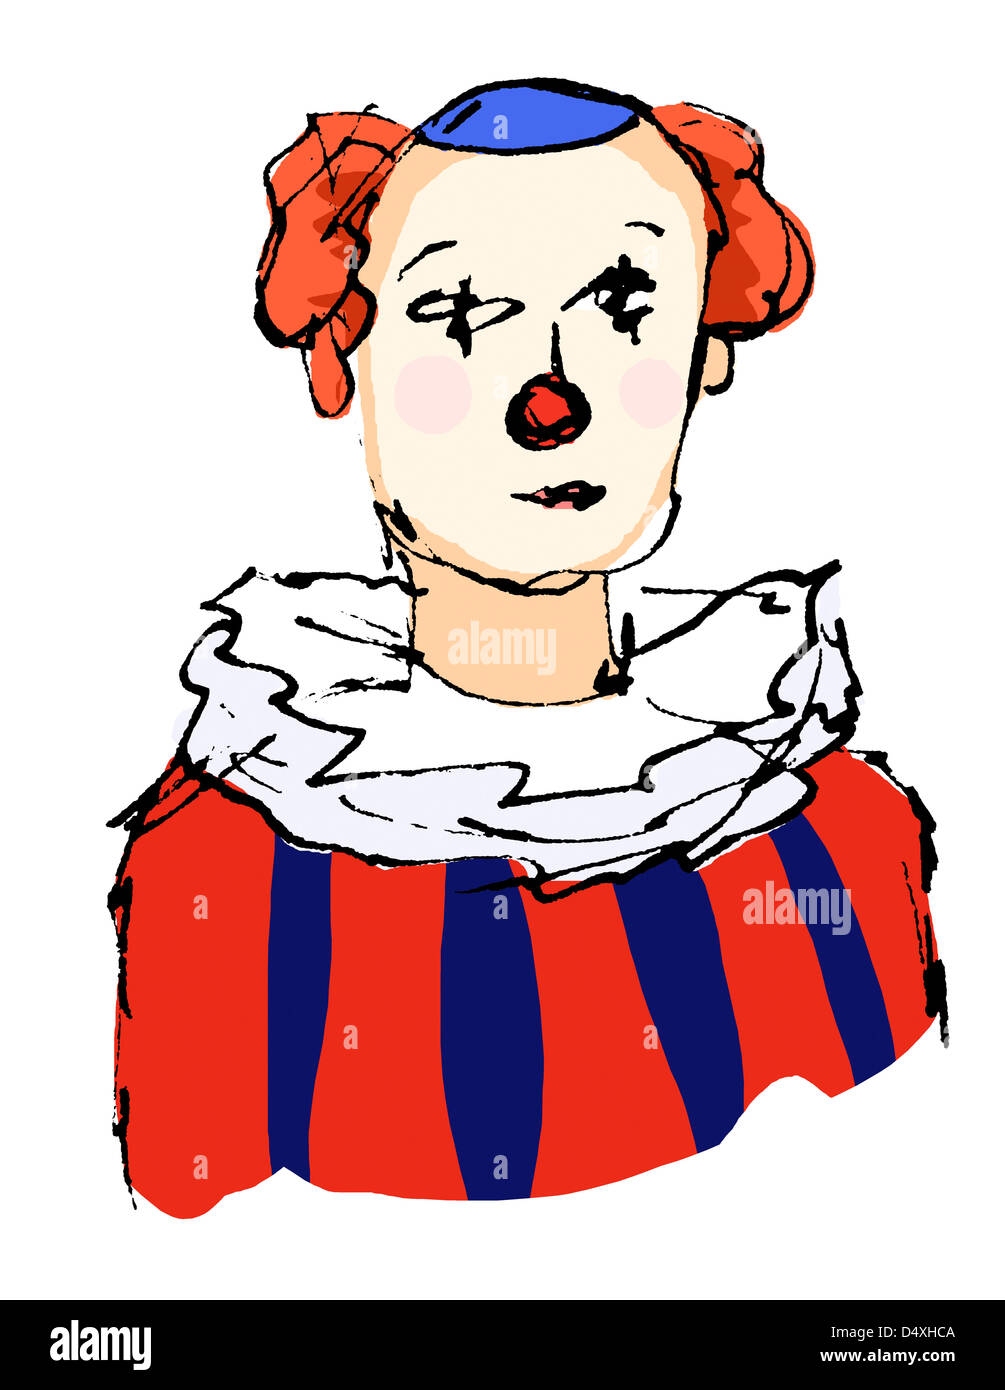 Portrait of a sad clown. Stock Photo